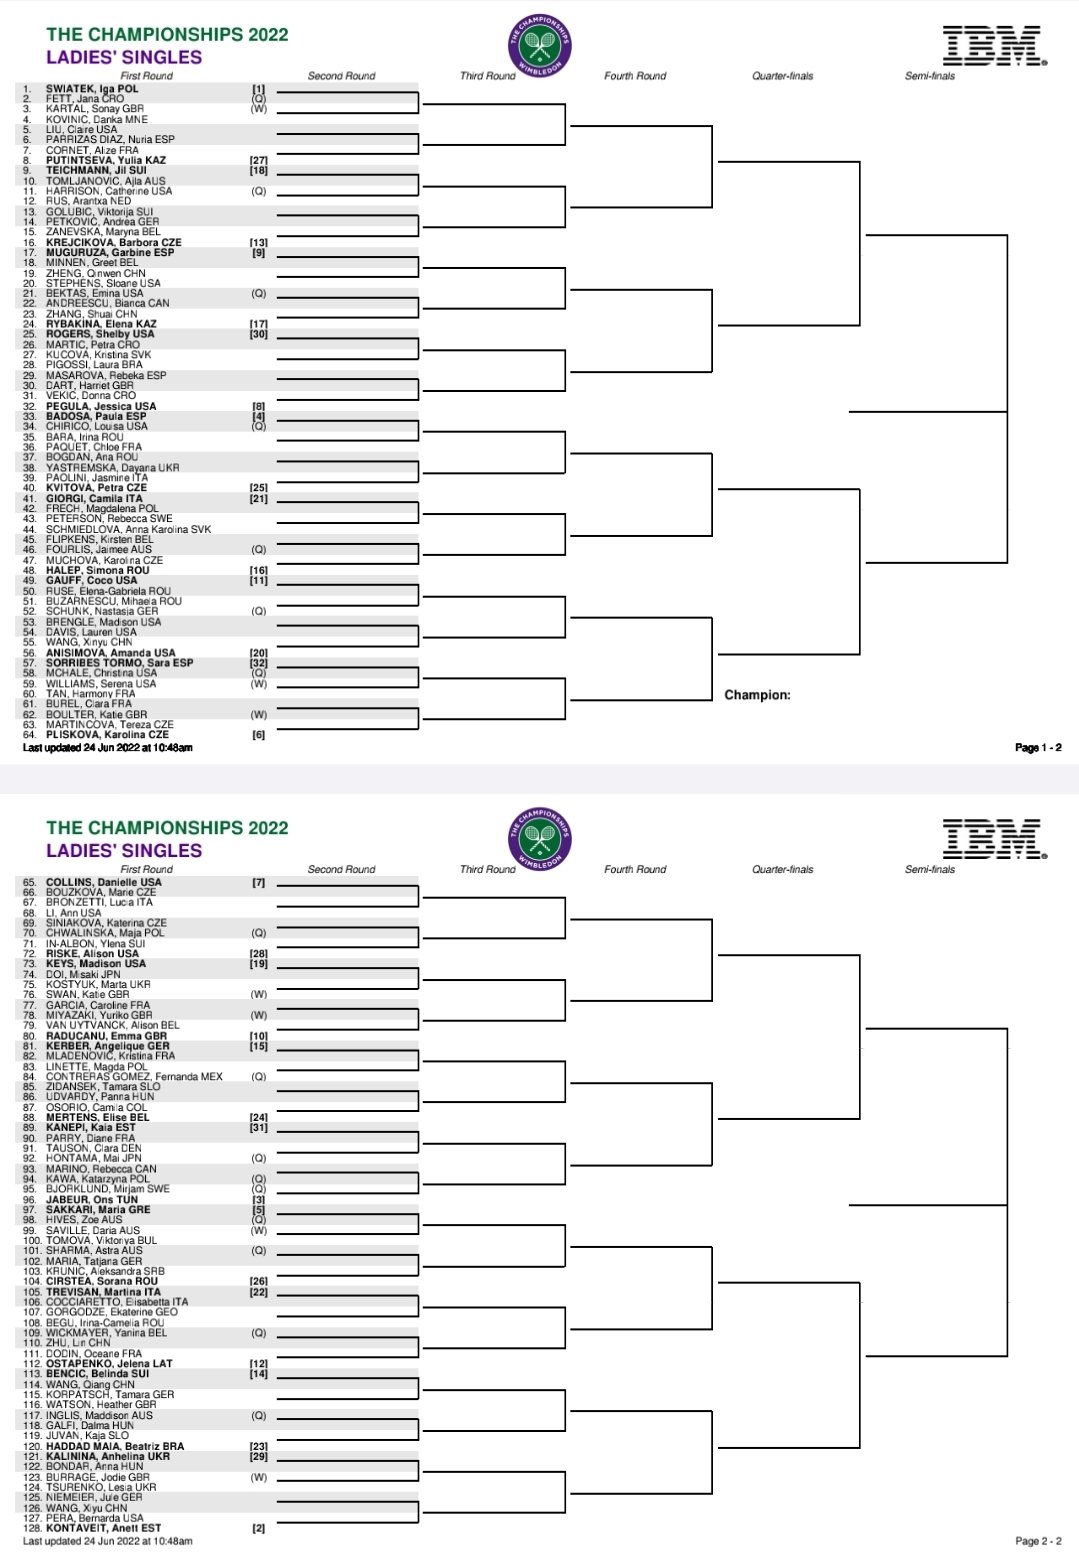 Mario Boccardi on X: Wimbledon main draw - women's singles   / X